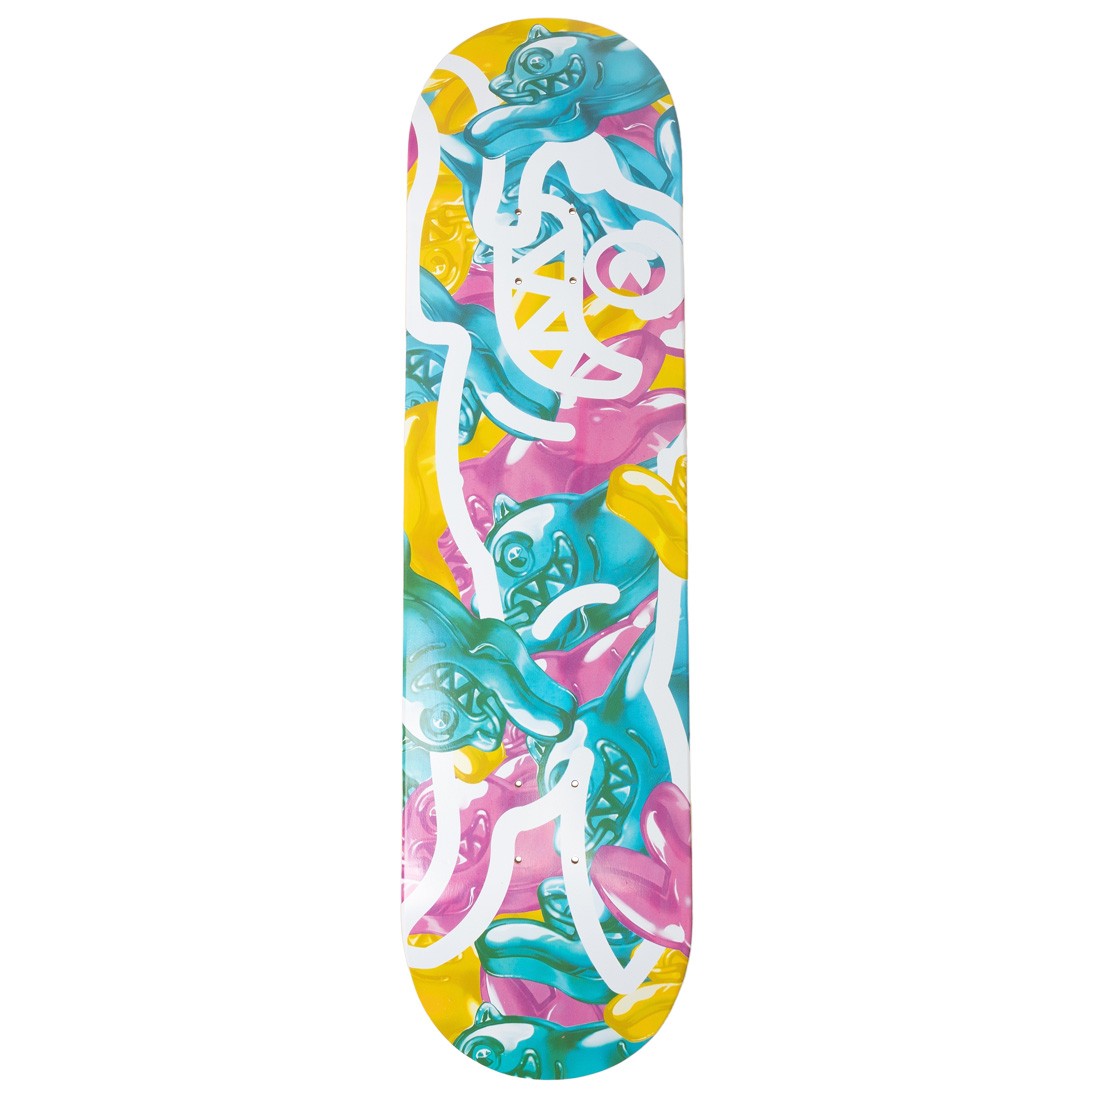 Ice Cream Potent Skateboard Deck (white / blue)